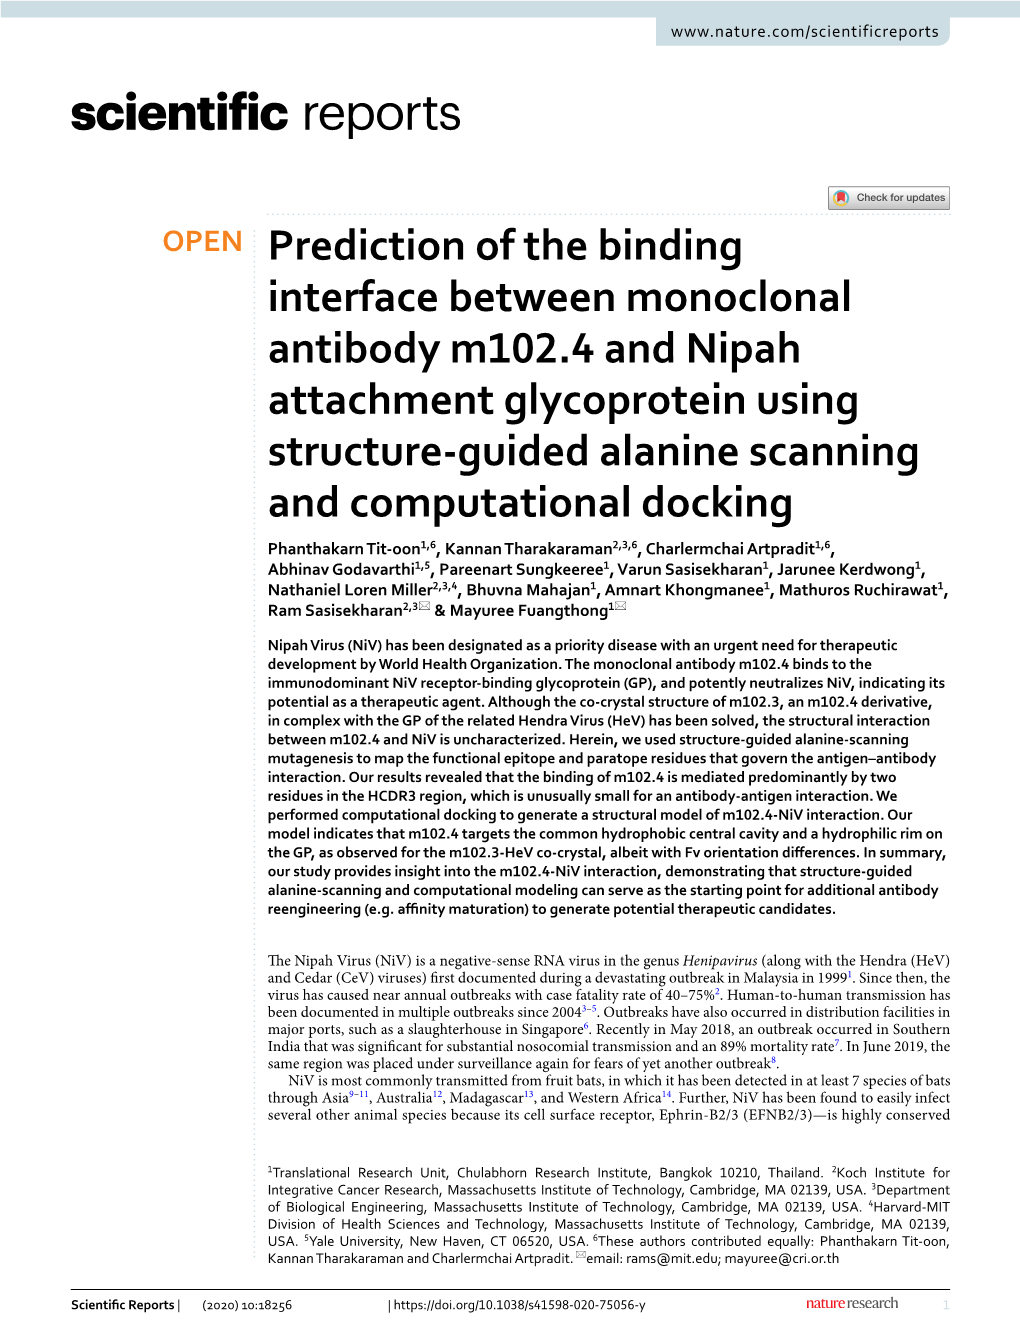 Prediction of the Binding Interface Between Monoclonal Antibody